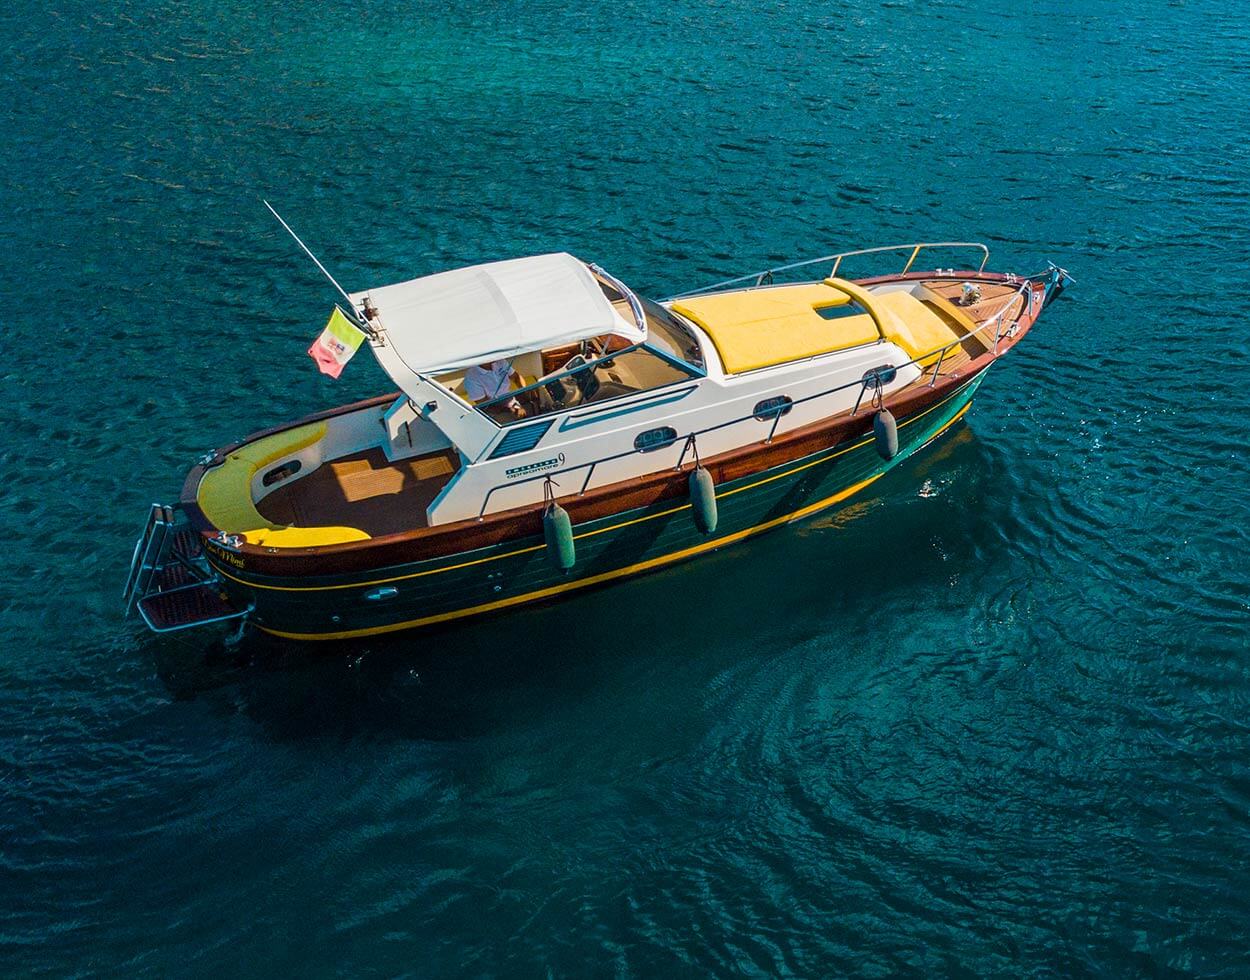 Ischia Boat Transfer